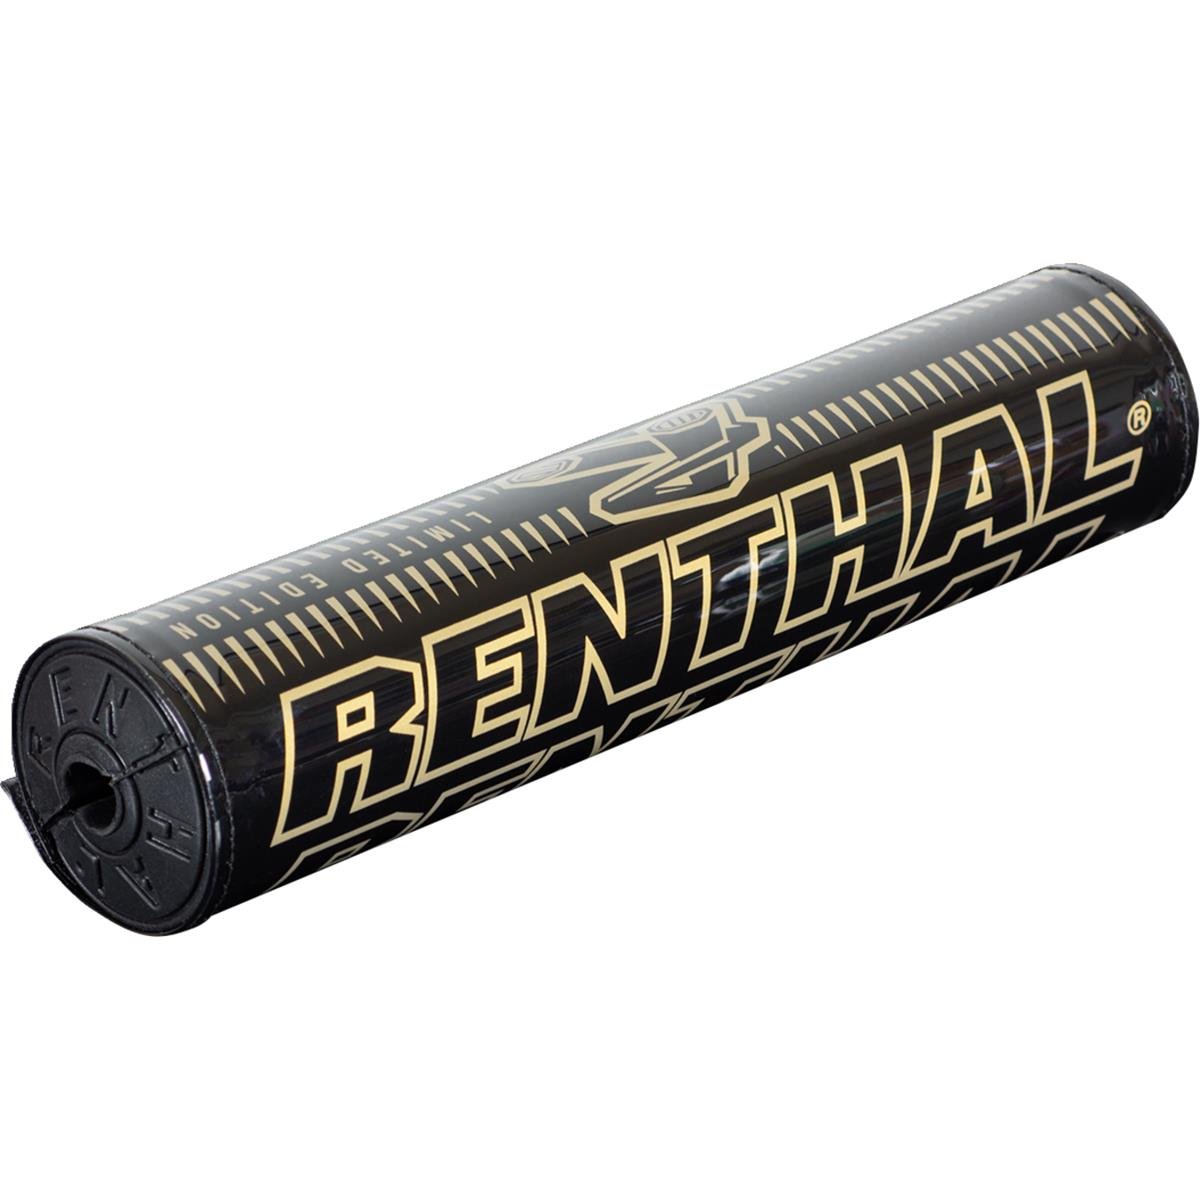 Renthal Bar Pad SX Limited Edition - Black/Gold